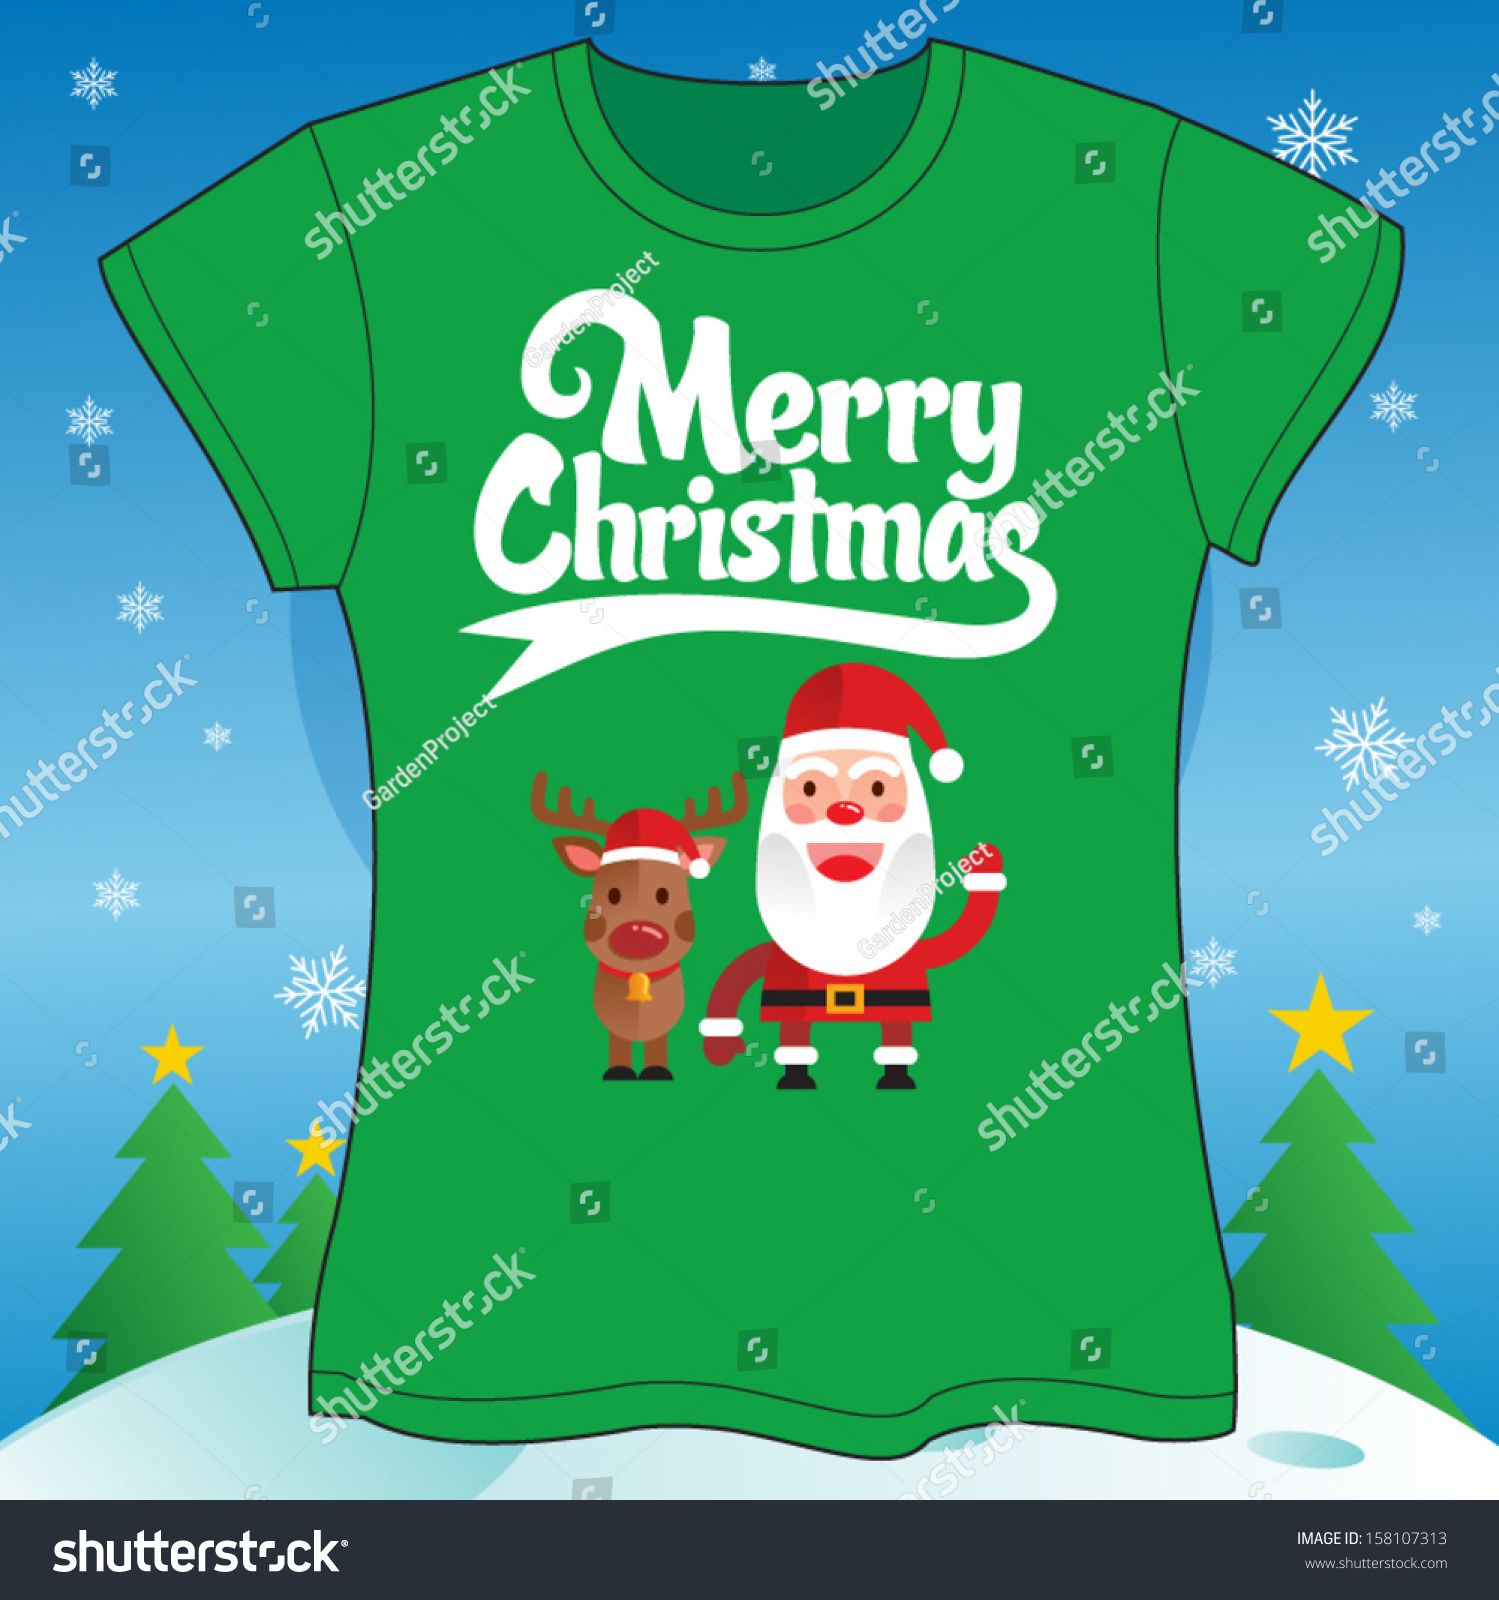 Download Christmas T-Shirt Vector Illustration - 158107313 : Shutterstock